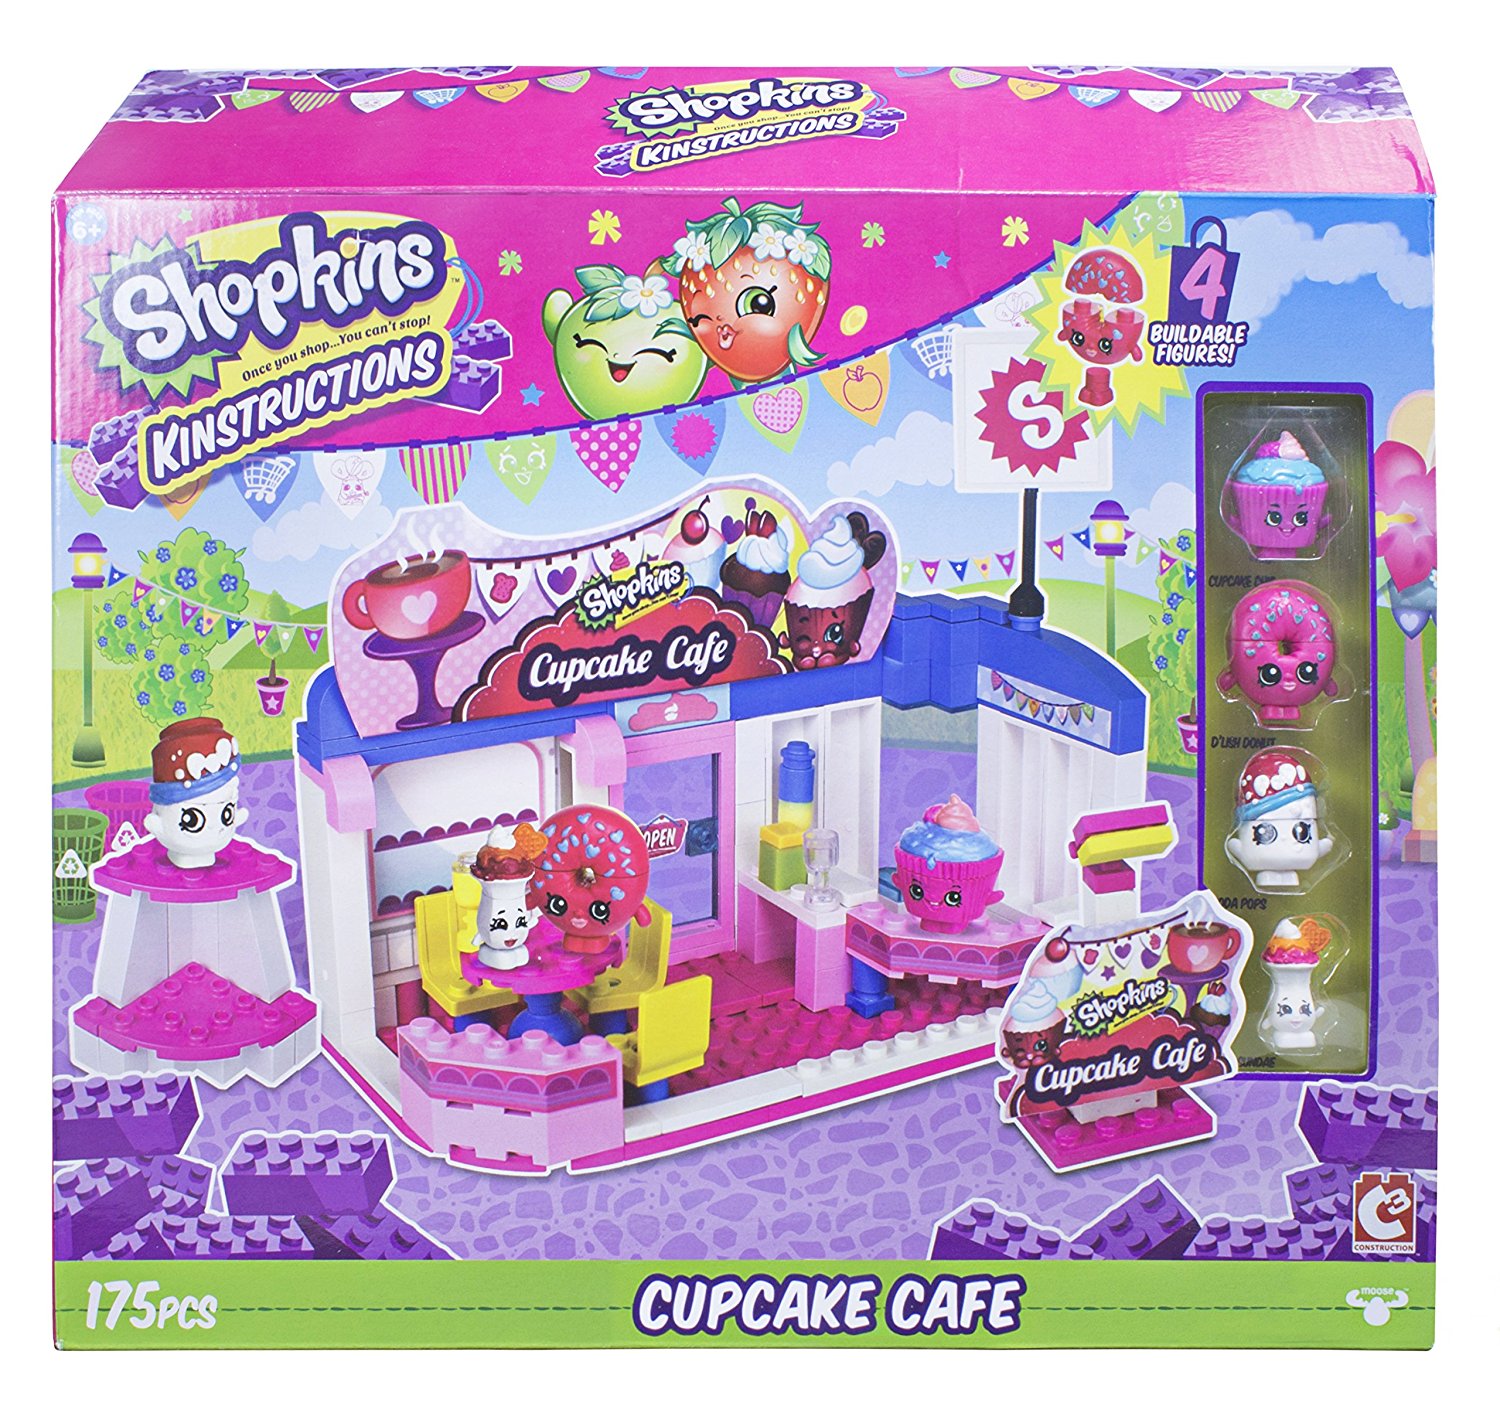 Shopkins Kinstructions Scene Pack Cupcake Cafe – Just $7.33!